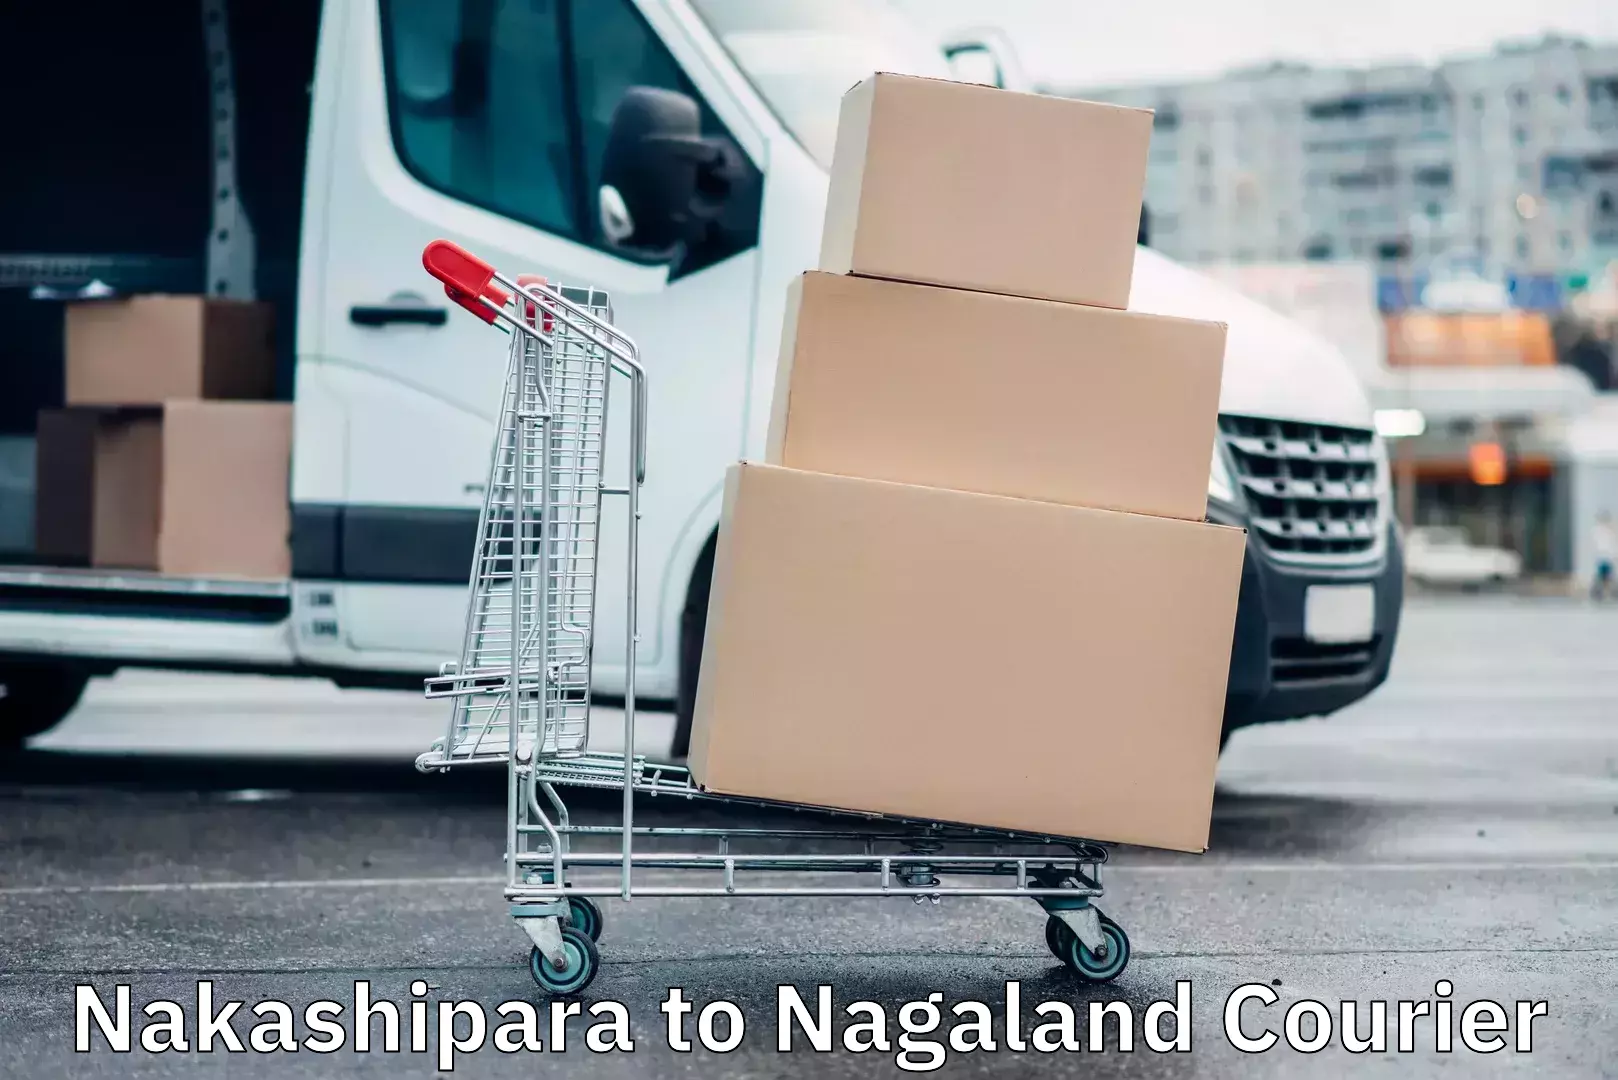 Express delivery network Nakashipara to Dimapur